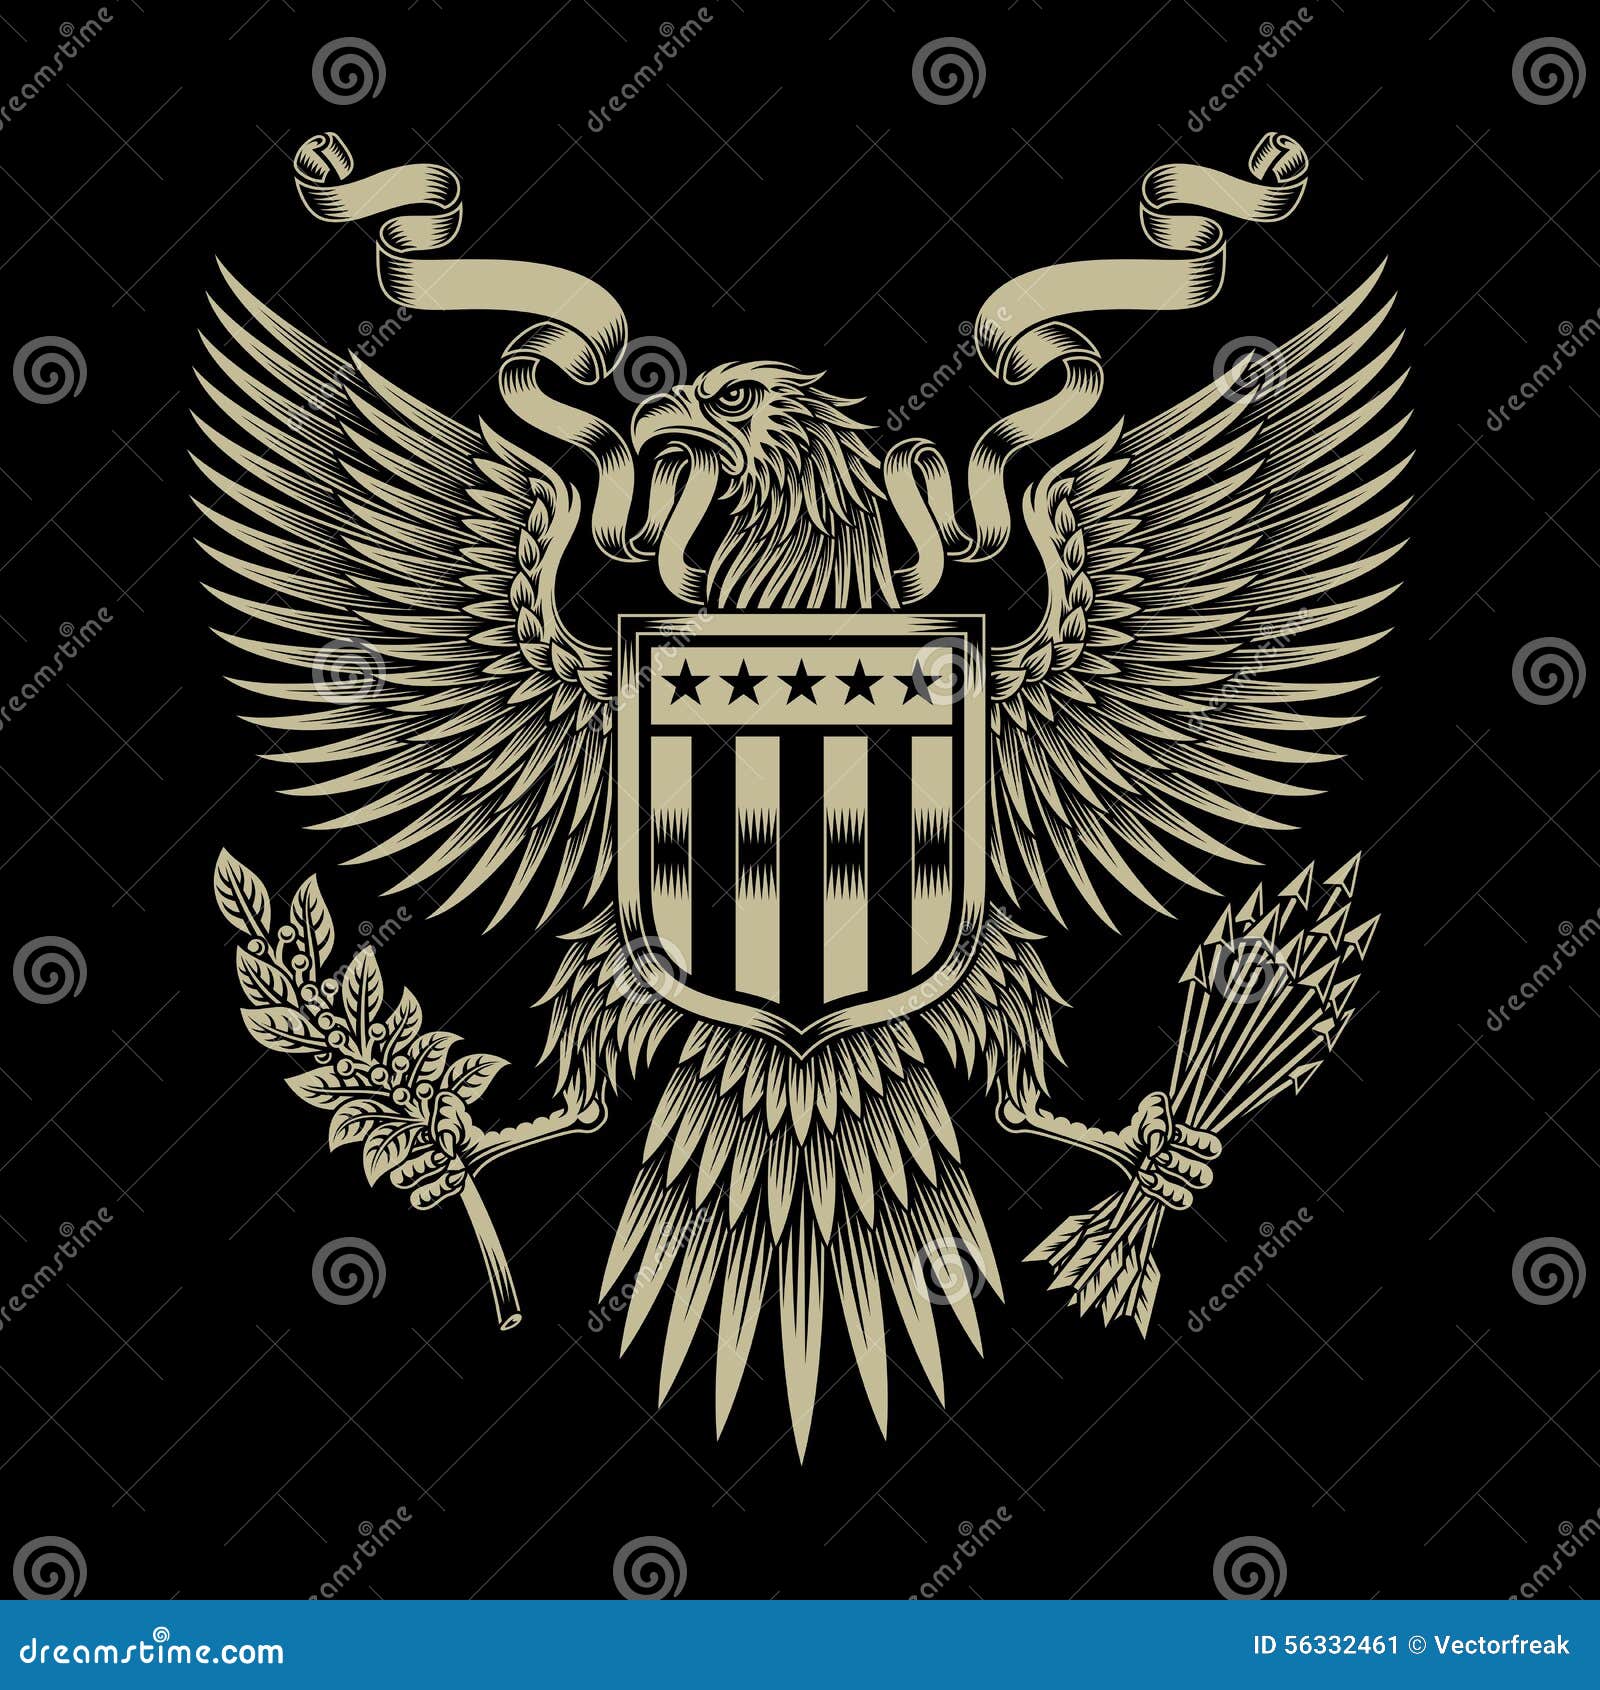 american eagle emblem